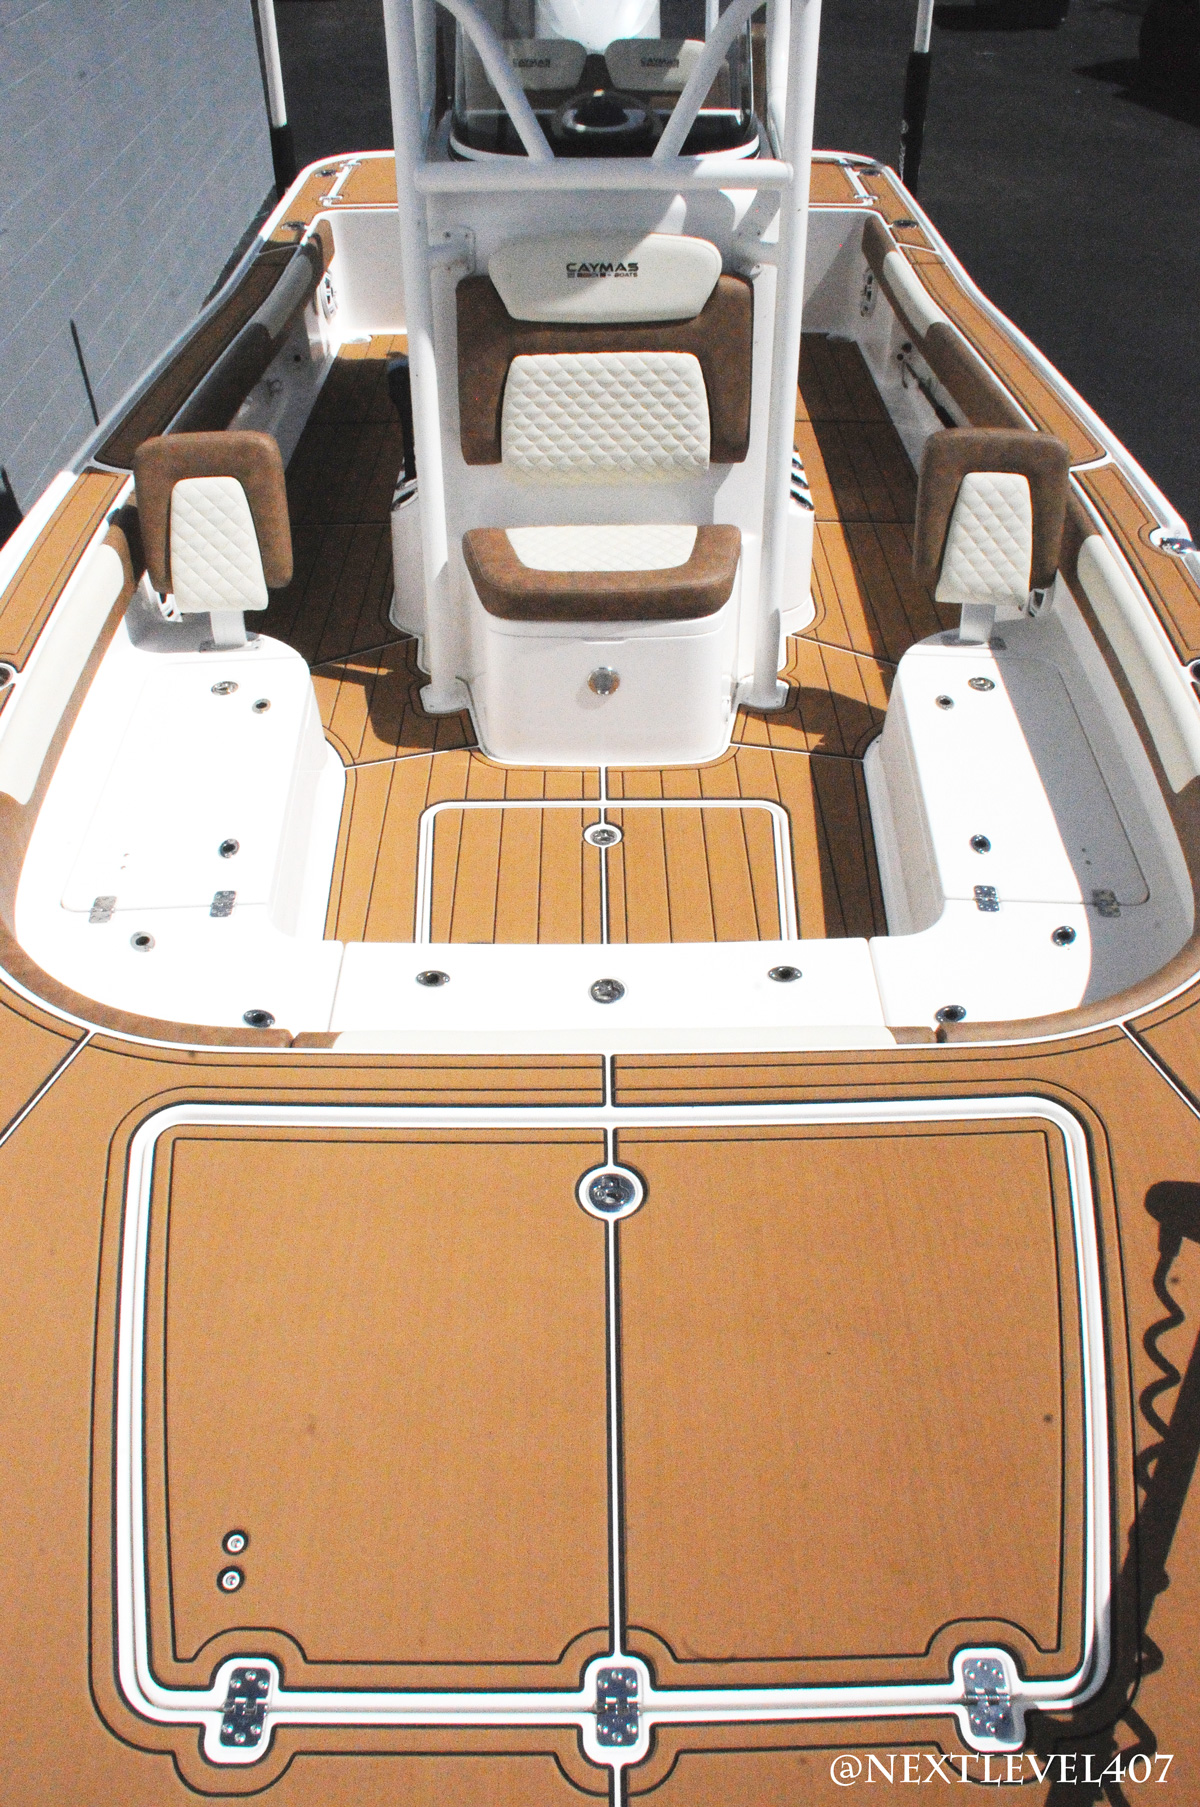 Baby-Blue-Caymas-Boat-On-Trailer-Next-Level-Inc-Debary-Store-Yamaha-Engine-Forward-Top-View-Lounge-SeaDek-Marine-Flooring-Fish-Ruler-Cup-Holders